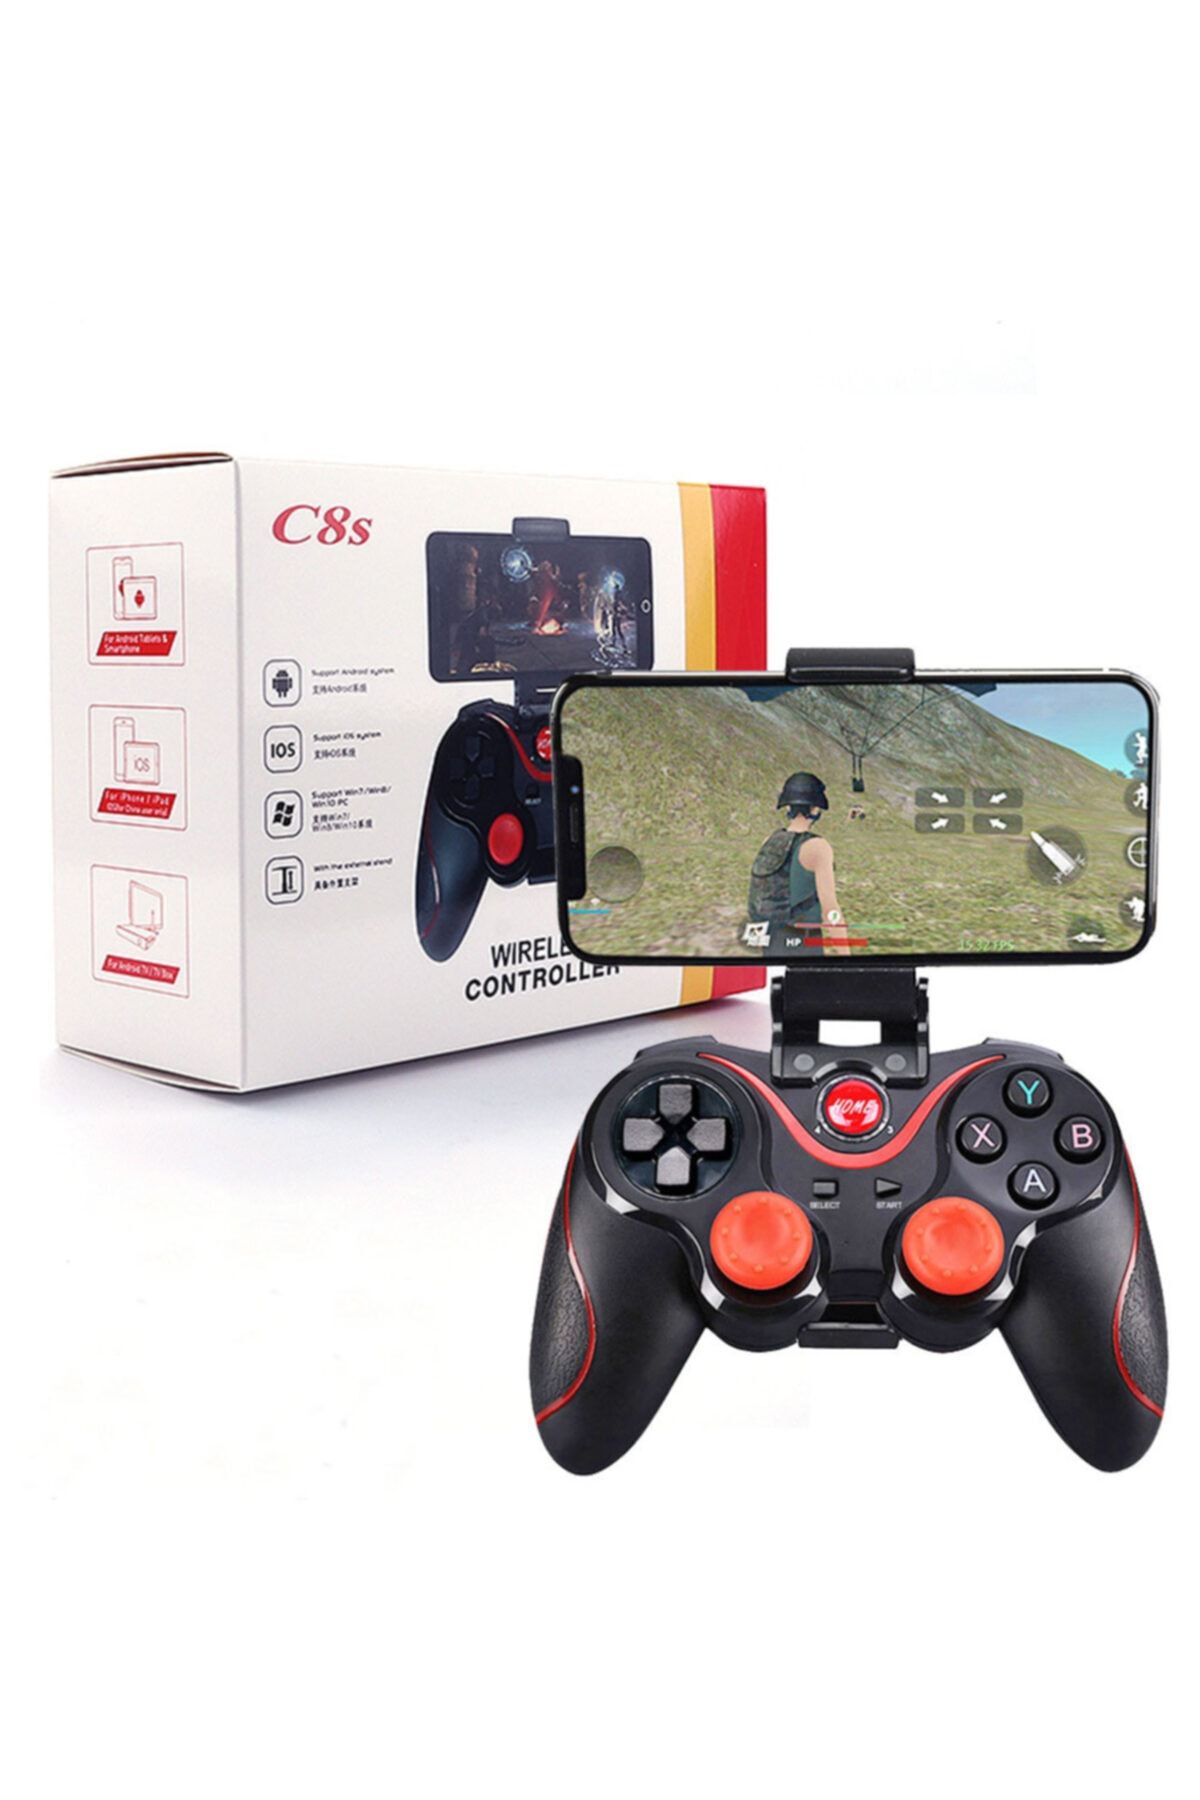 pubg c8s wireless kablosuz oyun kolu bluetooth joystick gamepad fiyati yorumlari trendyol